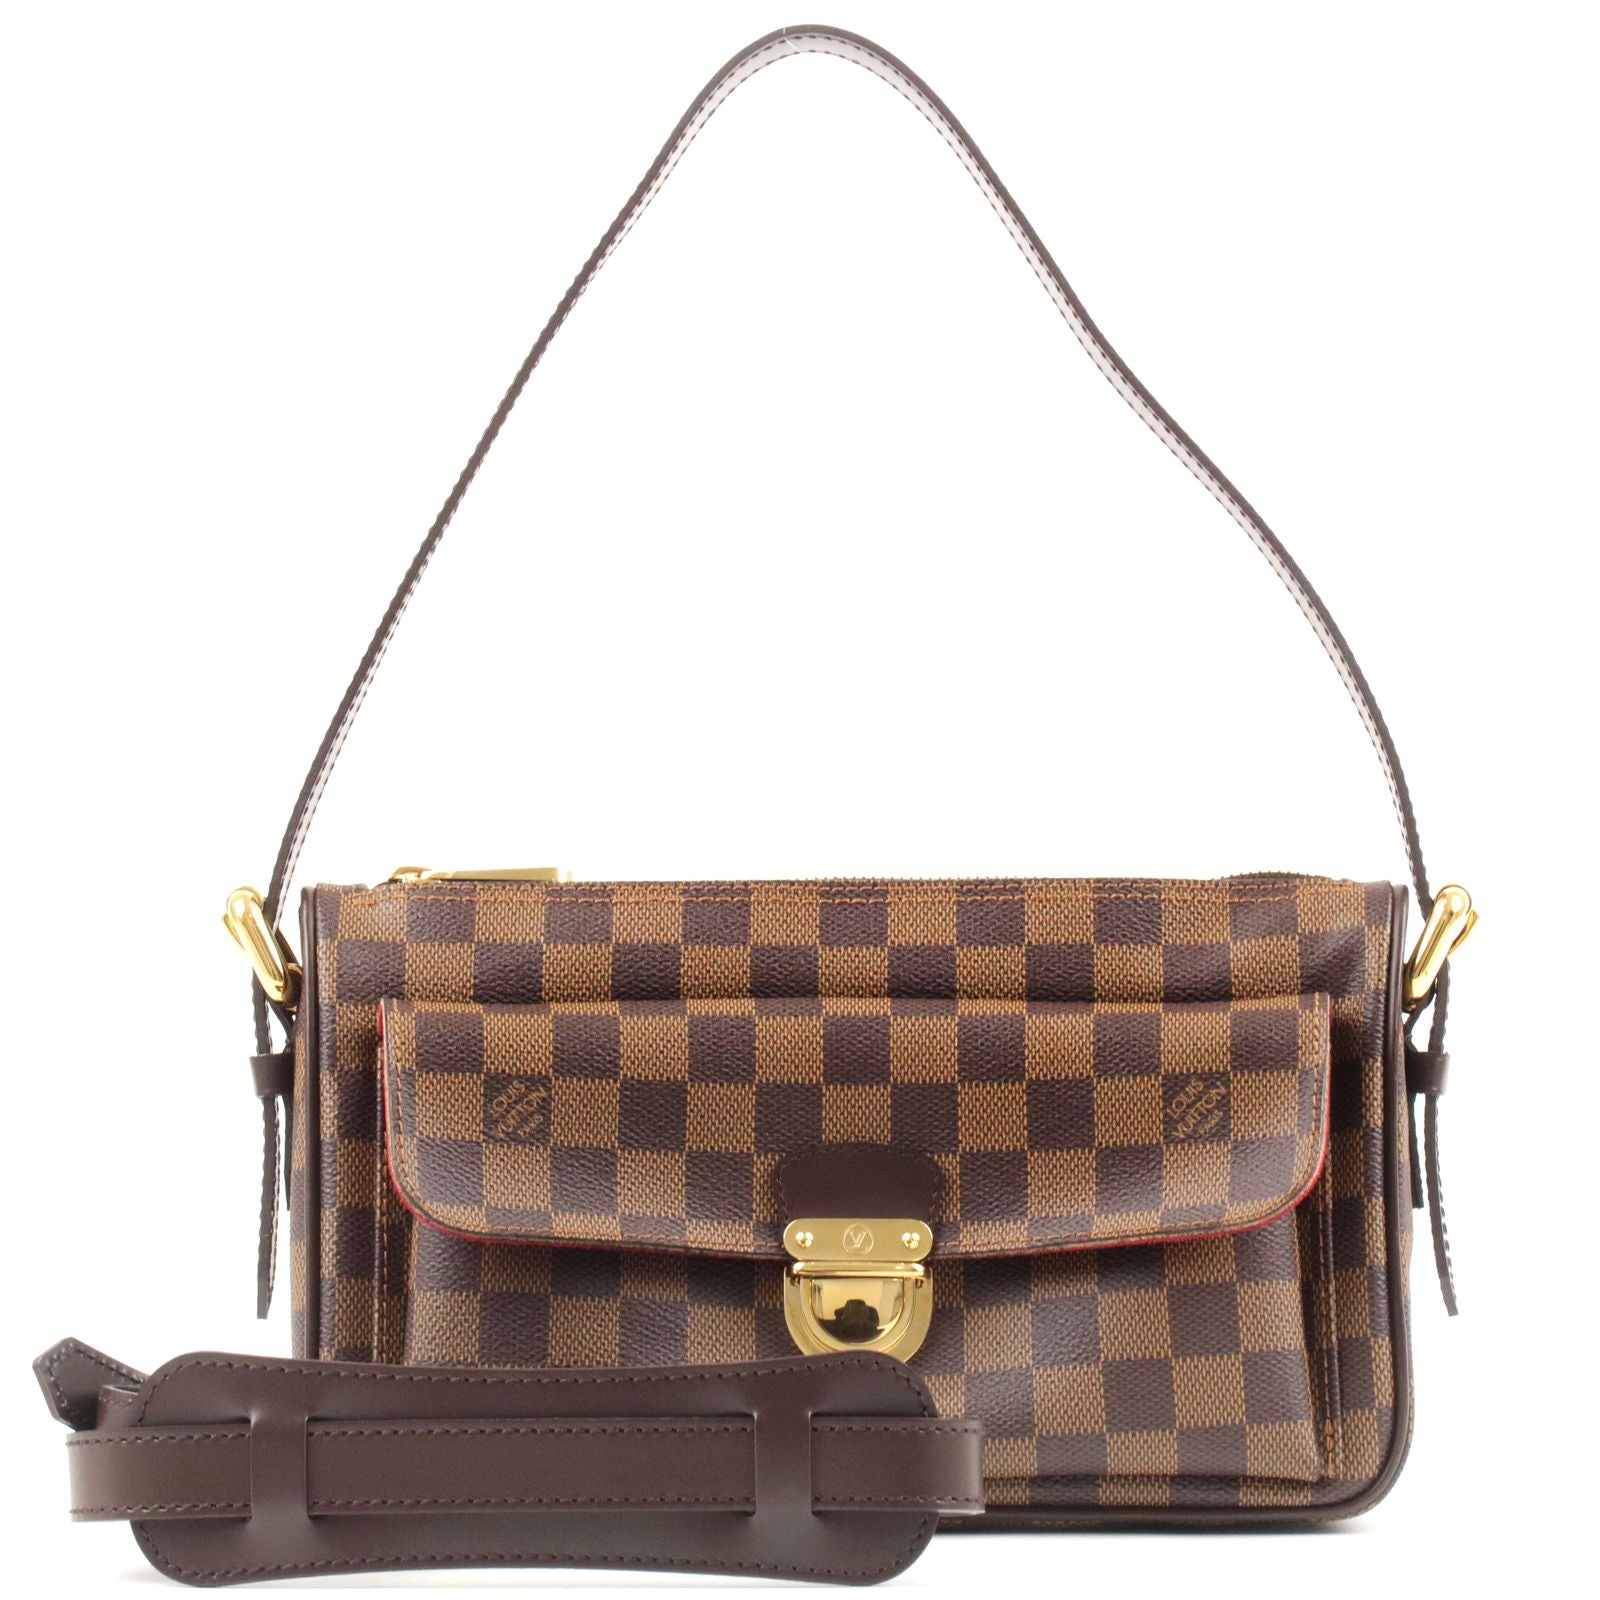 Louis Vuitton 'ravello Gm' Damiere Ebene Handbag